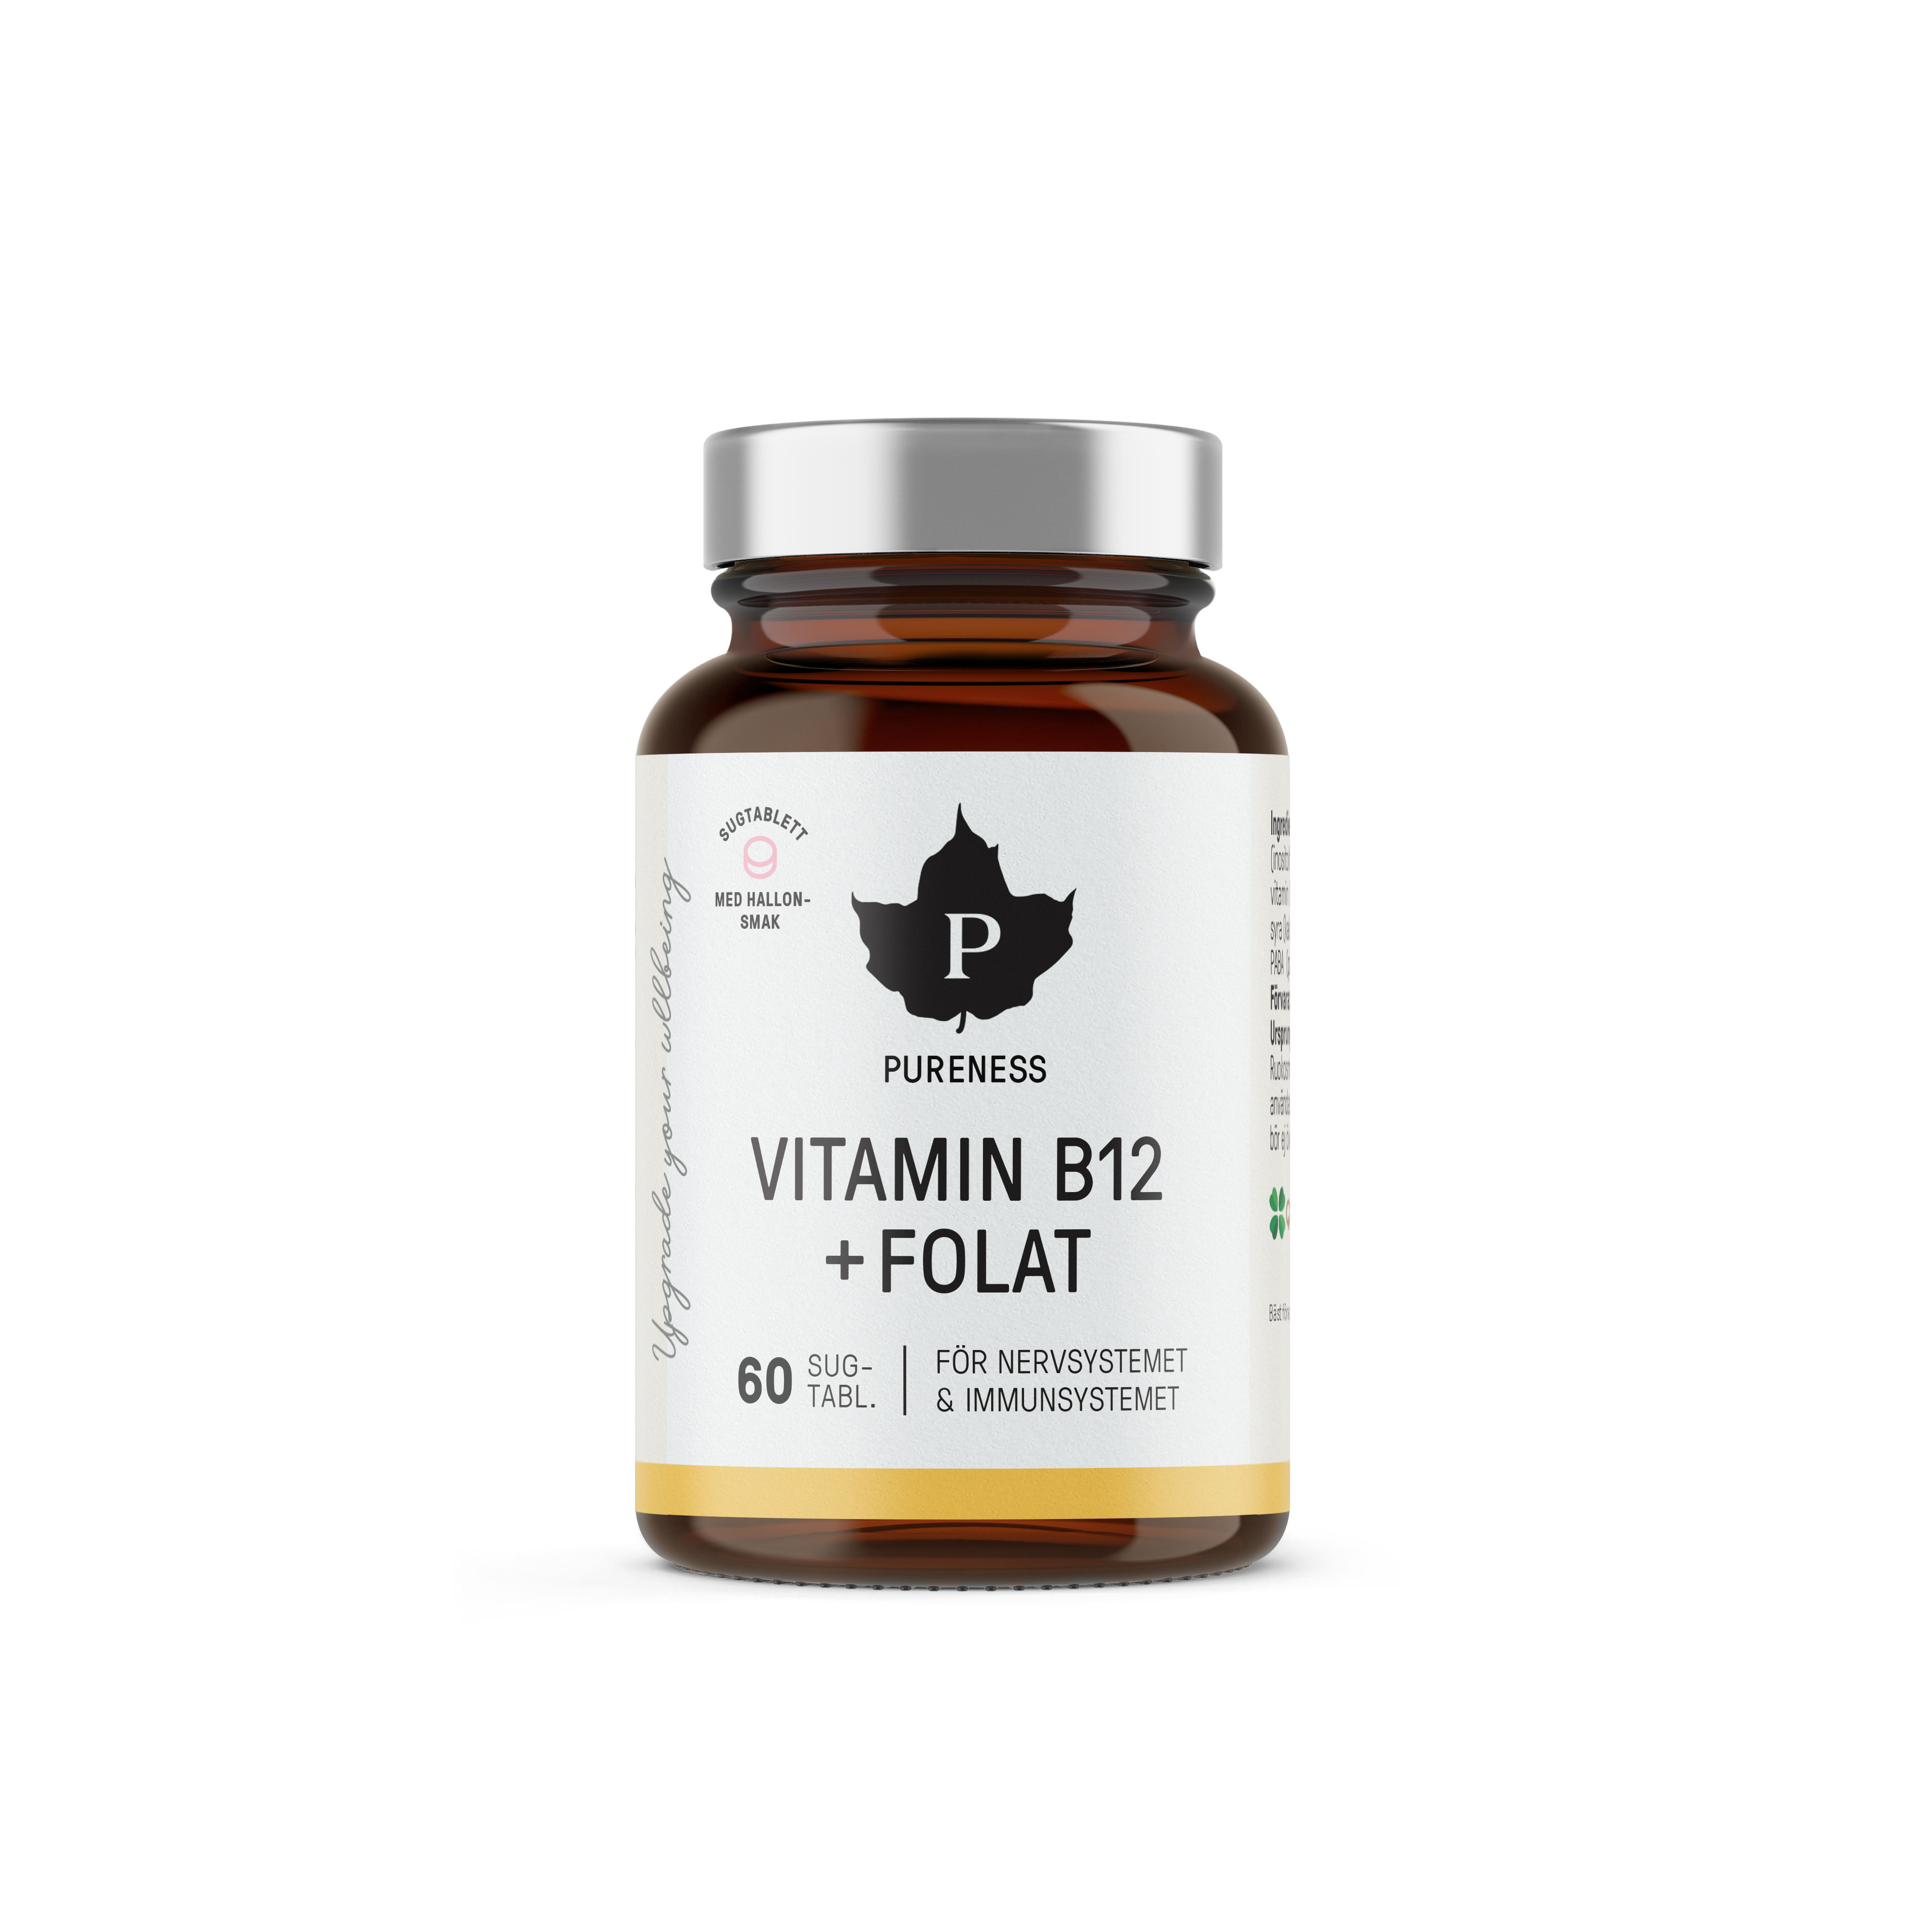 Pureness Vitamin B12 + Folat 60 sugtabletter